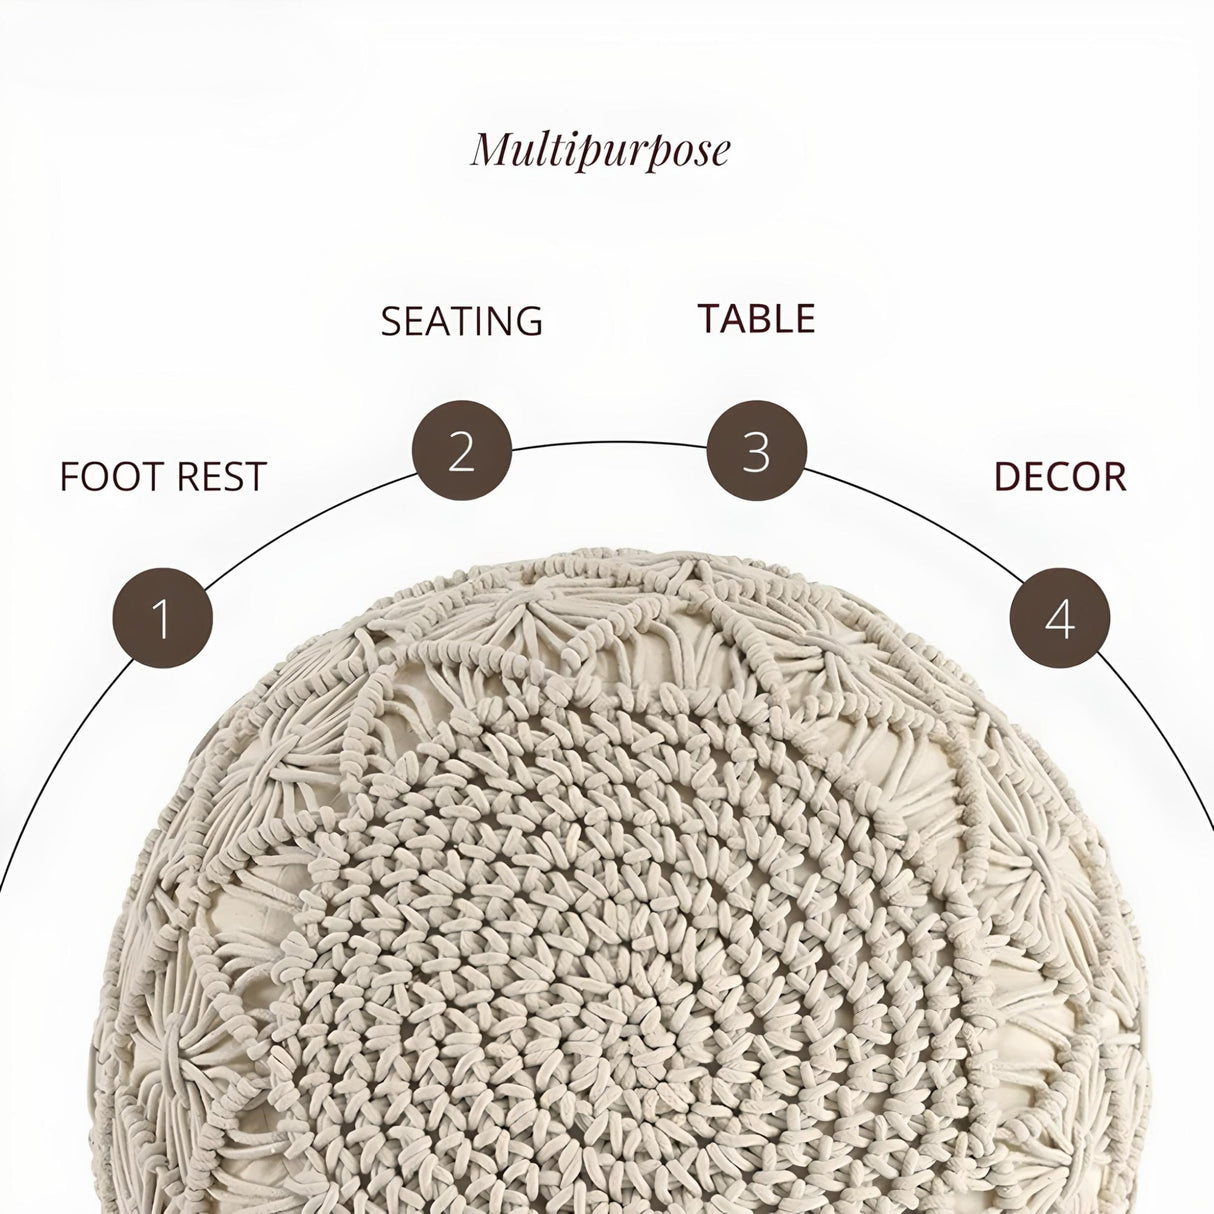 Hand-Knitted Cotton Ottoman Pouf: Modern Minimalist Foot Rest